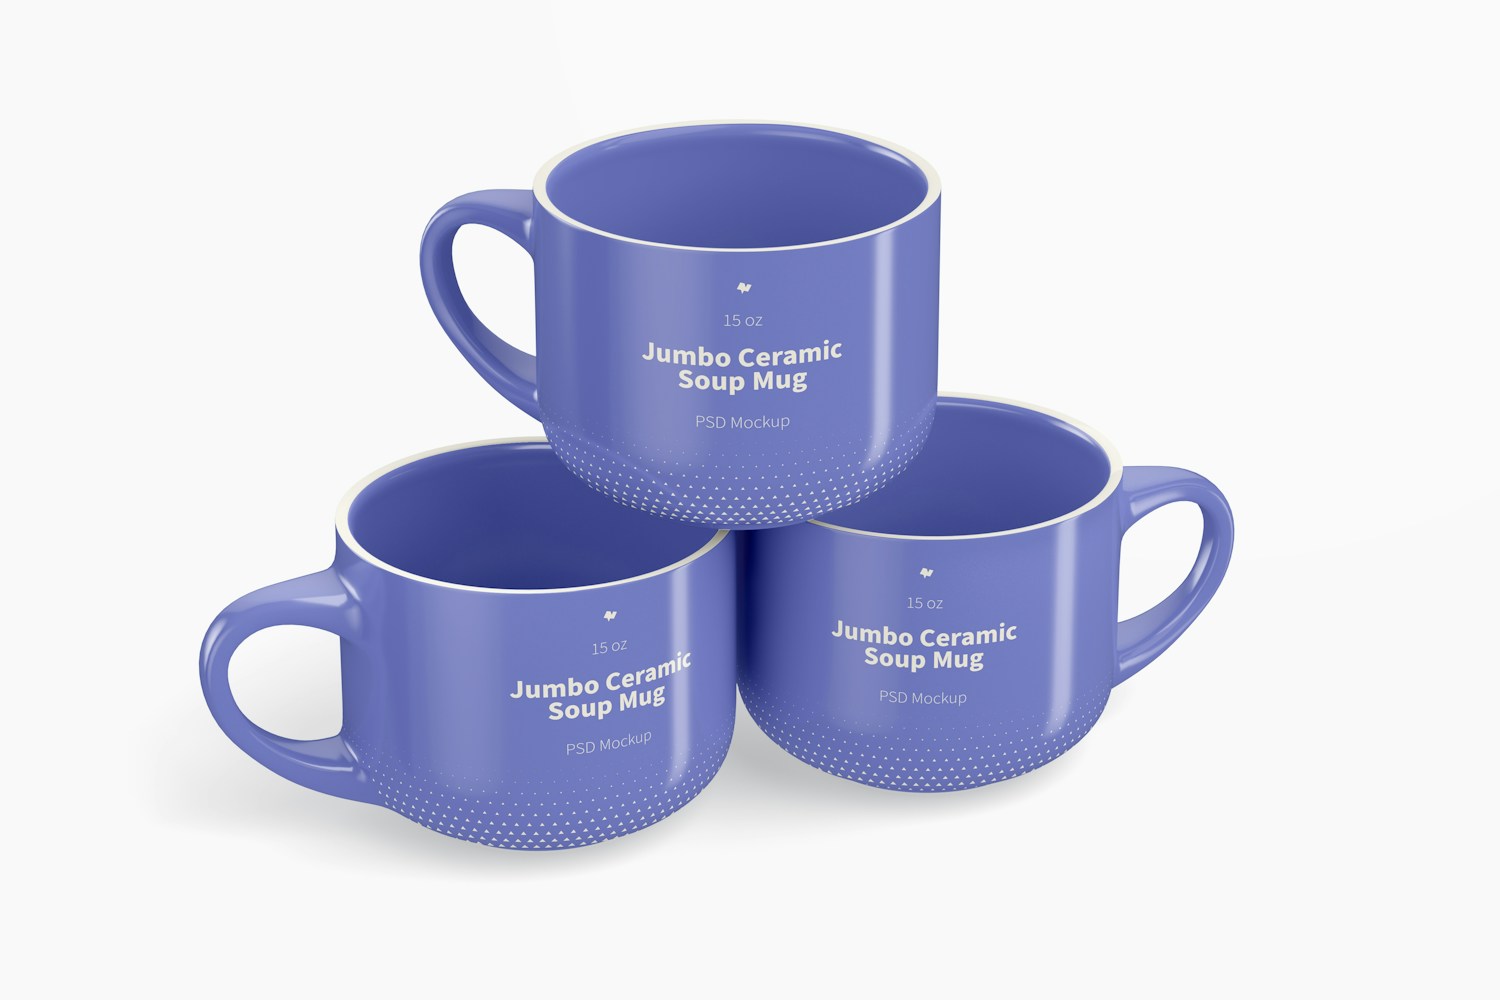 15 oz Jumbo Ceramic Soup Mugs Mockup